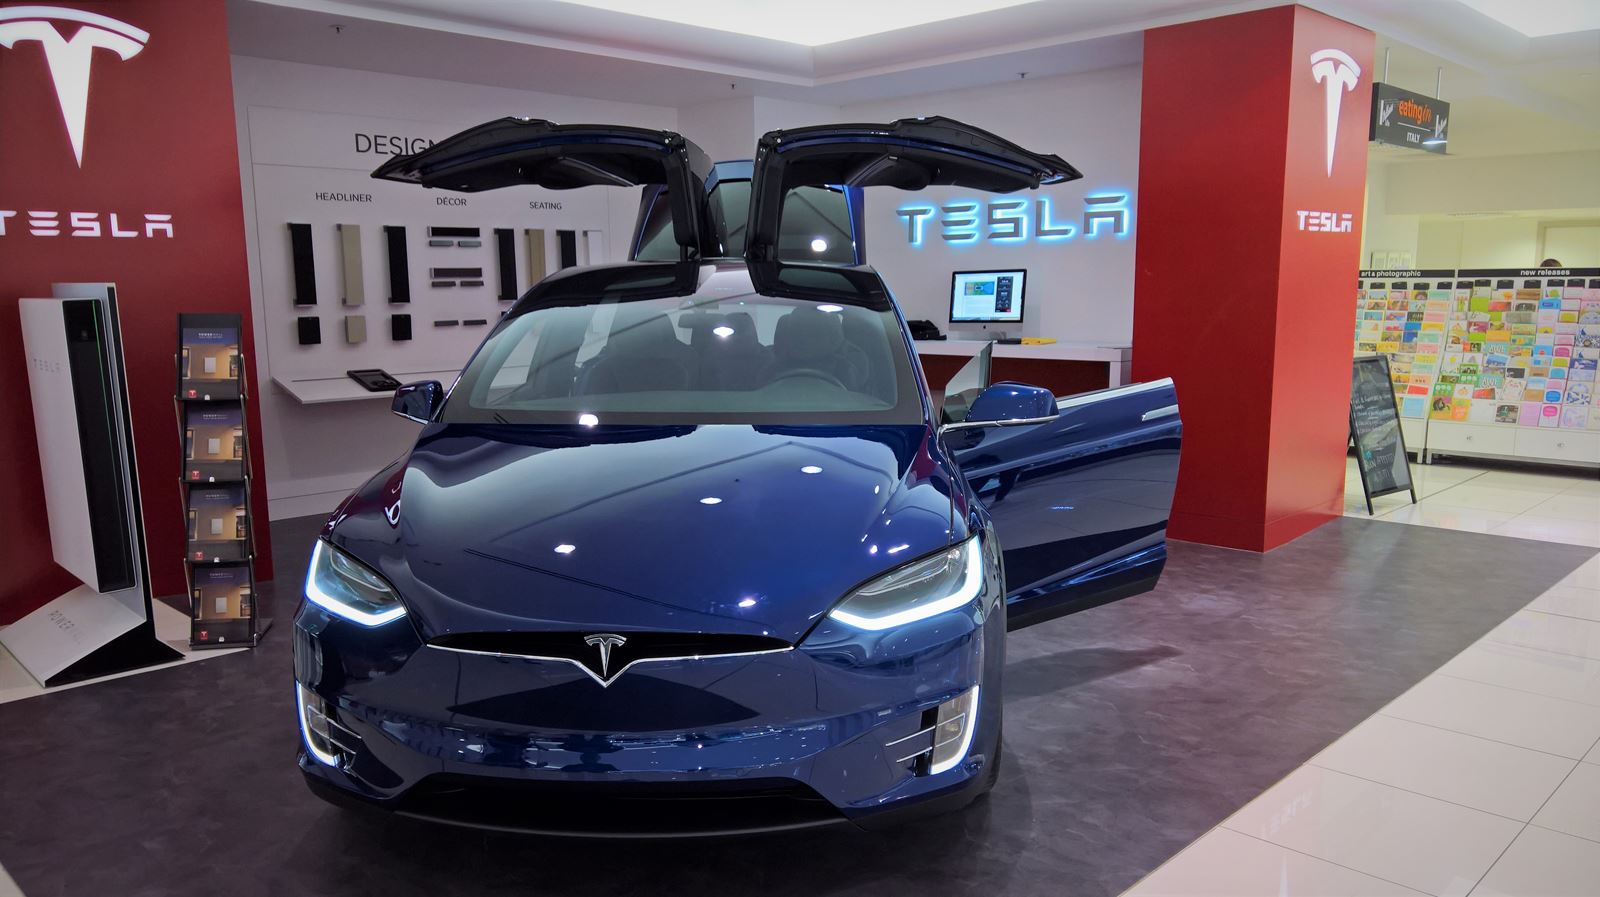 Tesla: Bringing the future to Adelaide.